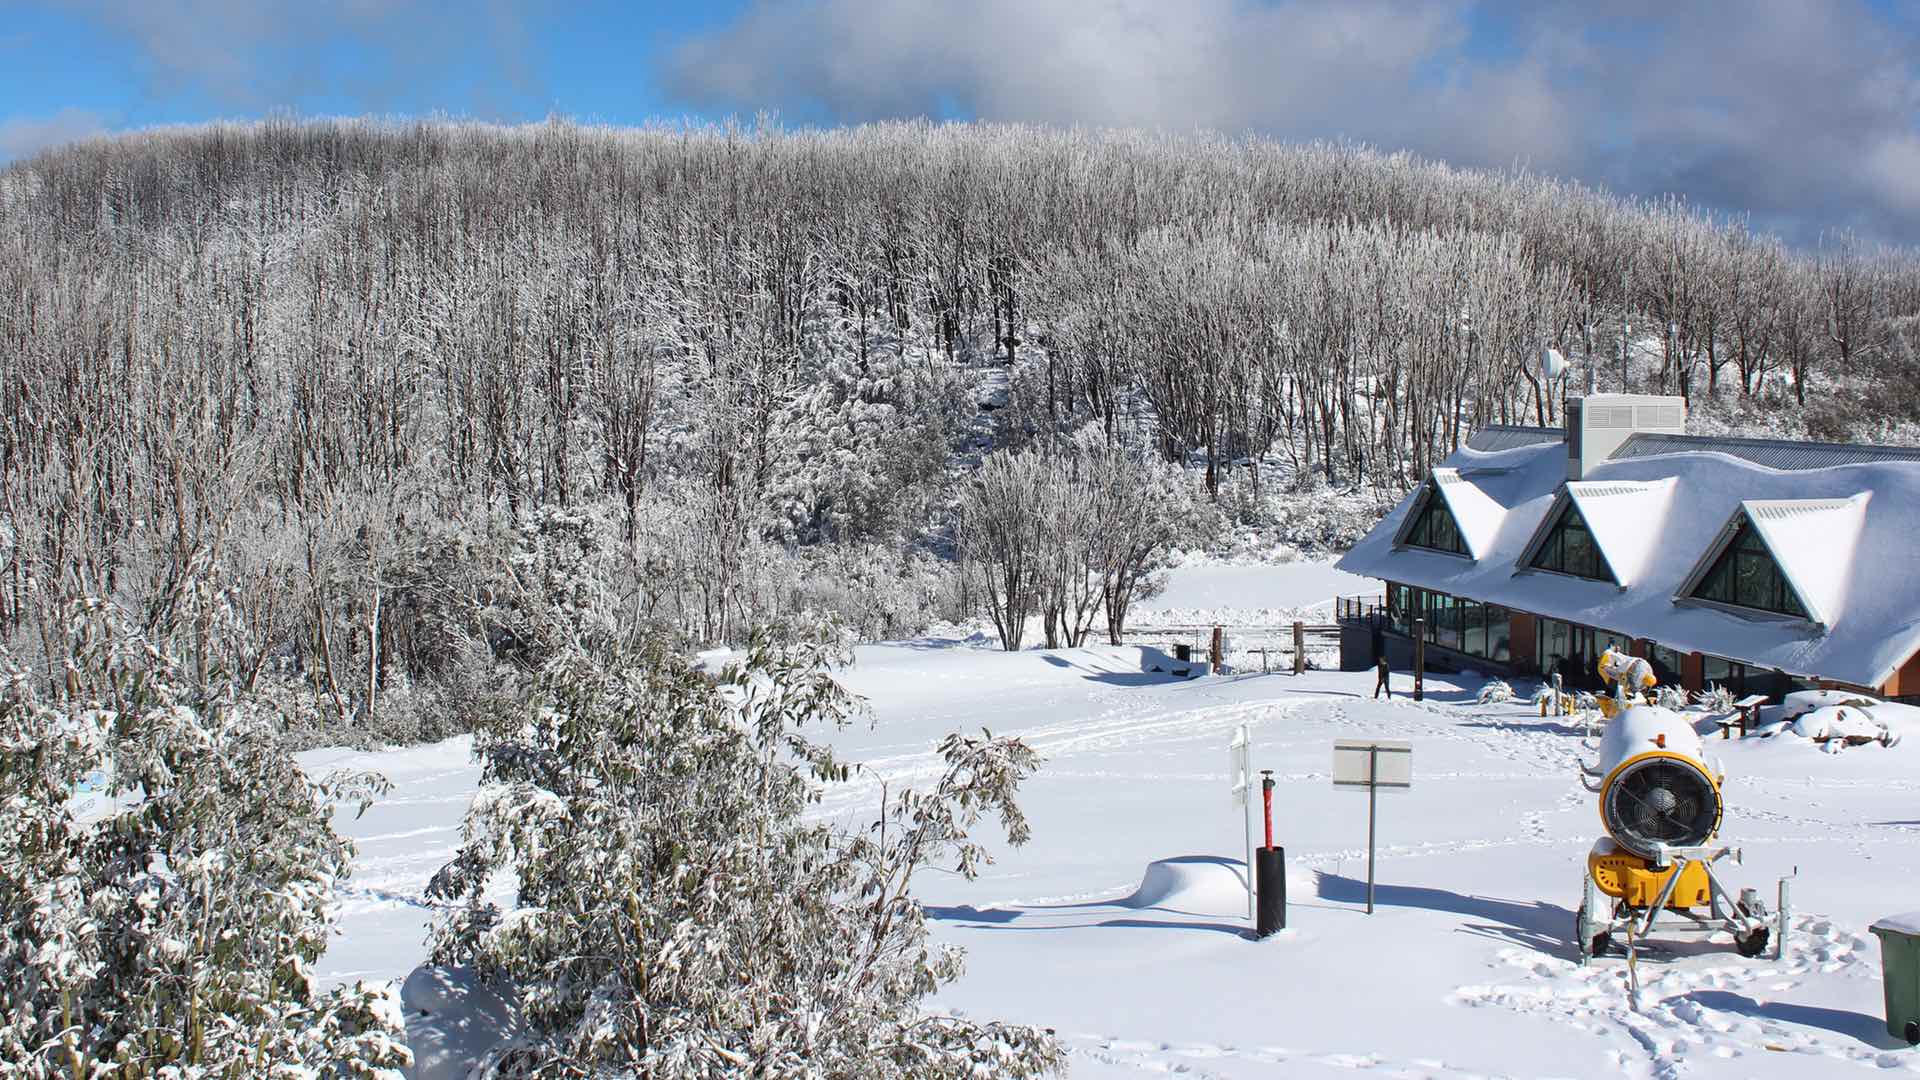 The Ten Best Ski Resorts in Australia